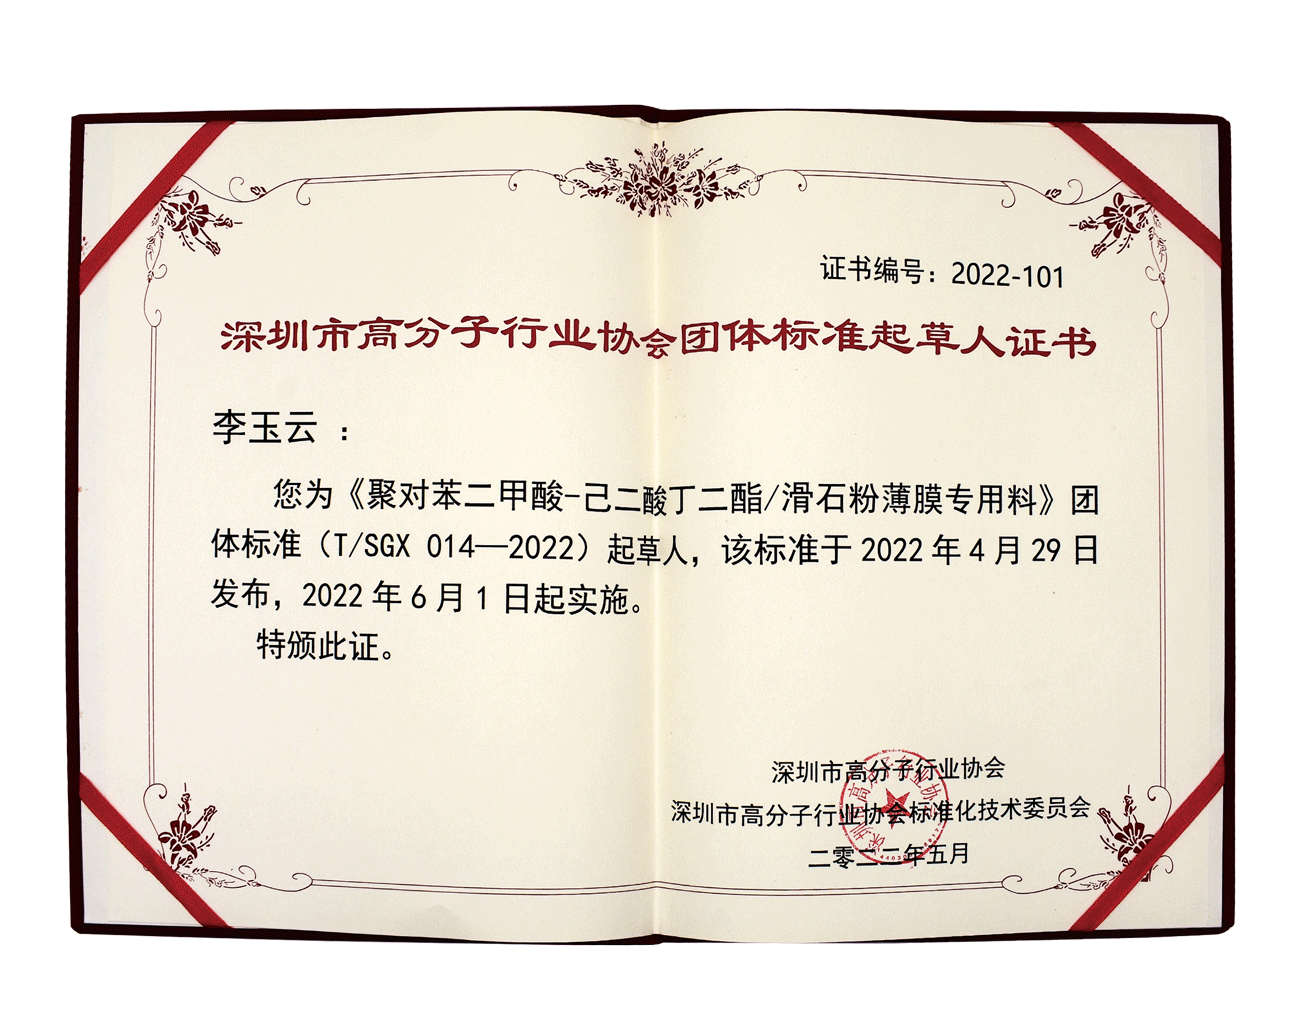 Group Standard Drafter Certificate of Shenzhen Polymer Industry Association